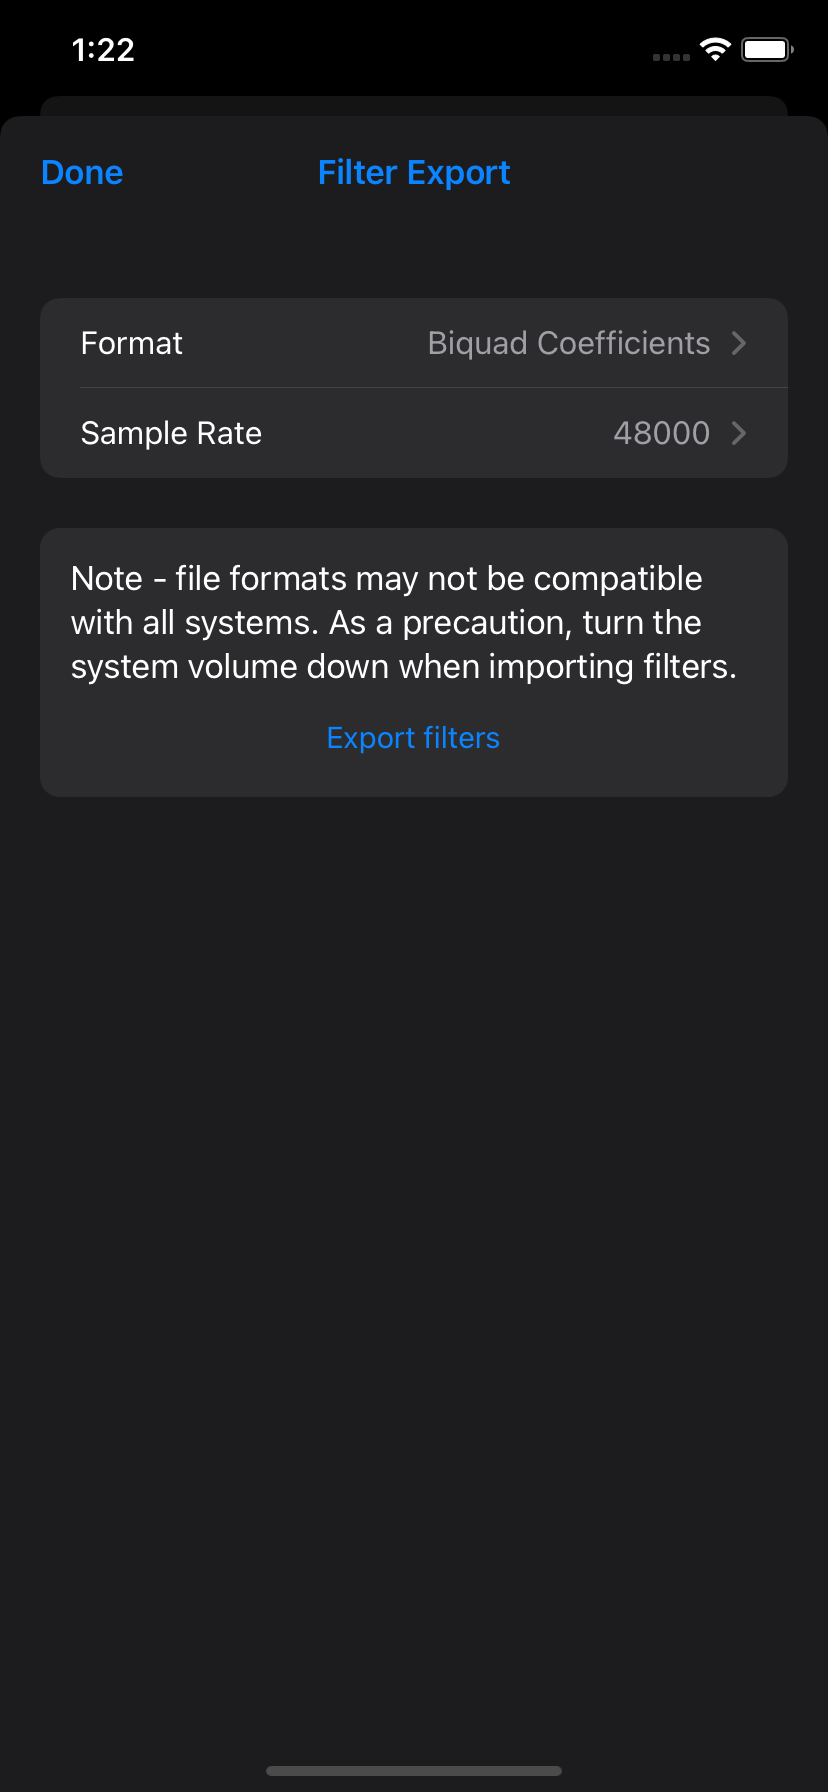 Filter export screen